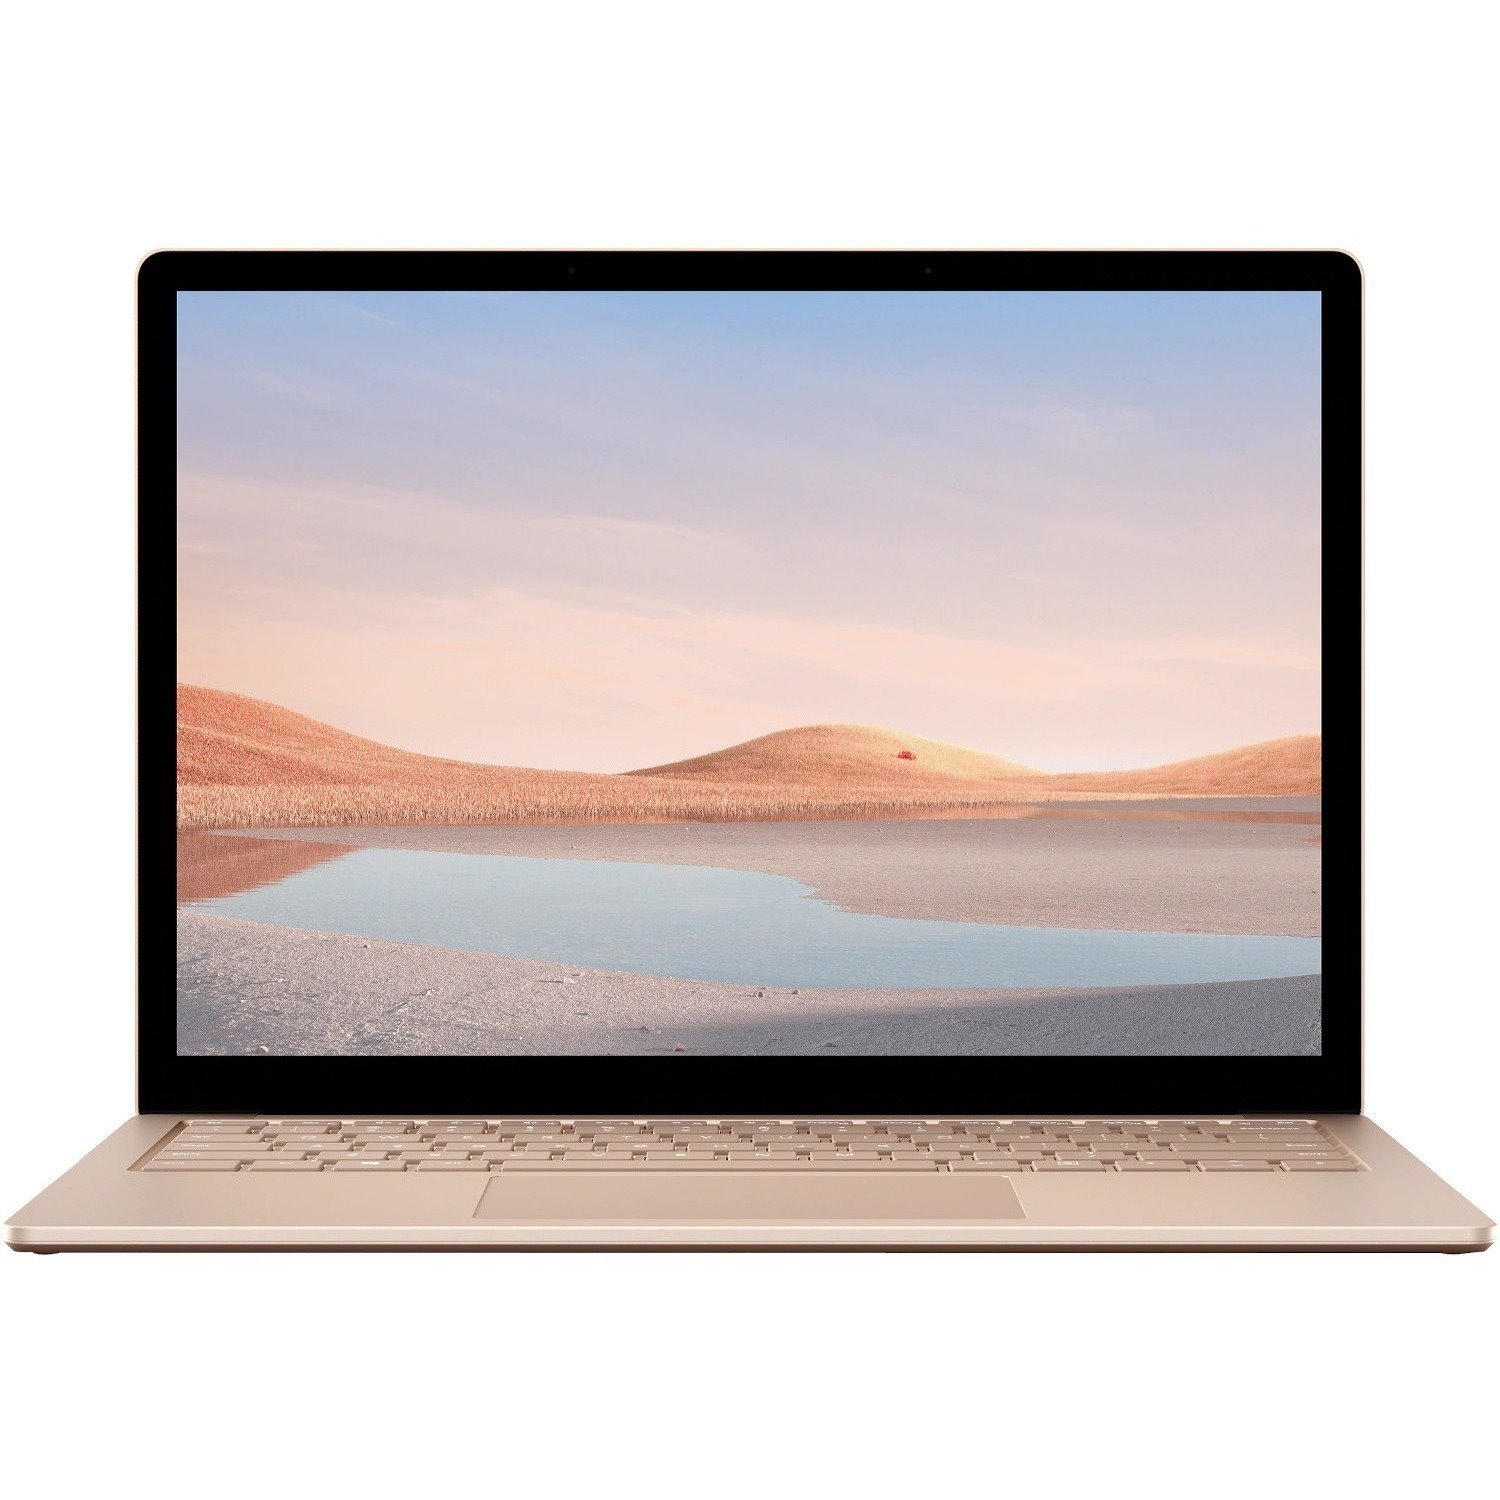 Microsoft Surface Laptop 4 13.5" Touchscreen Notebook - Intel Core i5 - 16 GB - 512 GB SSD - Sandstone